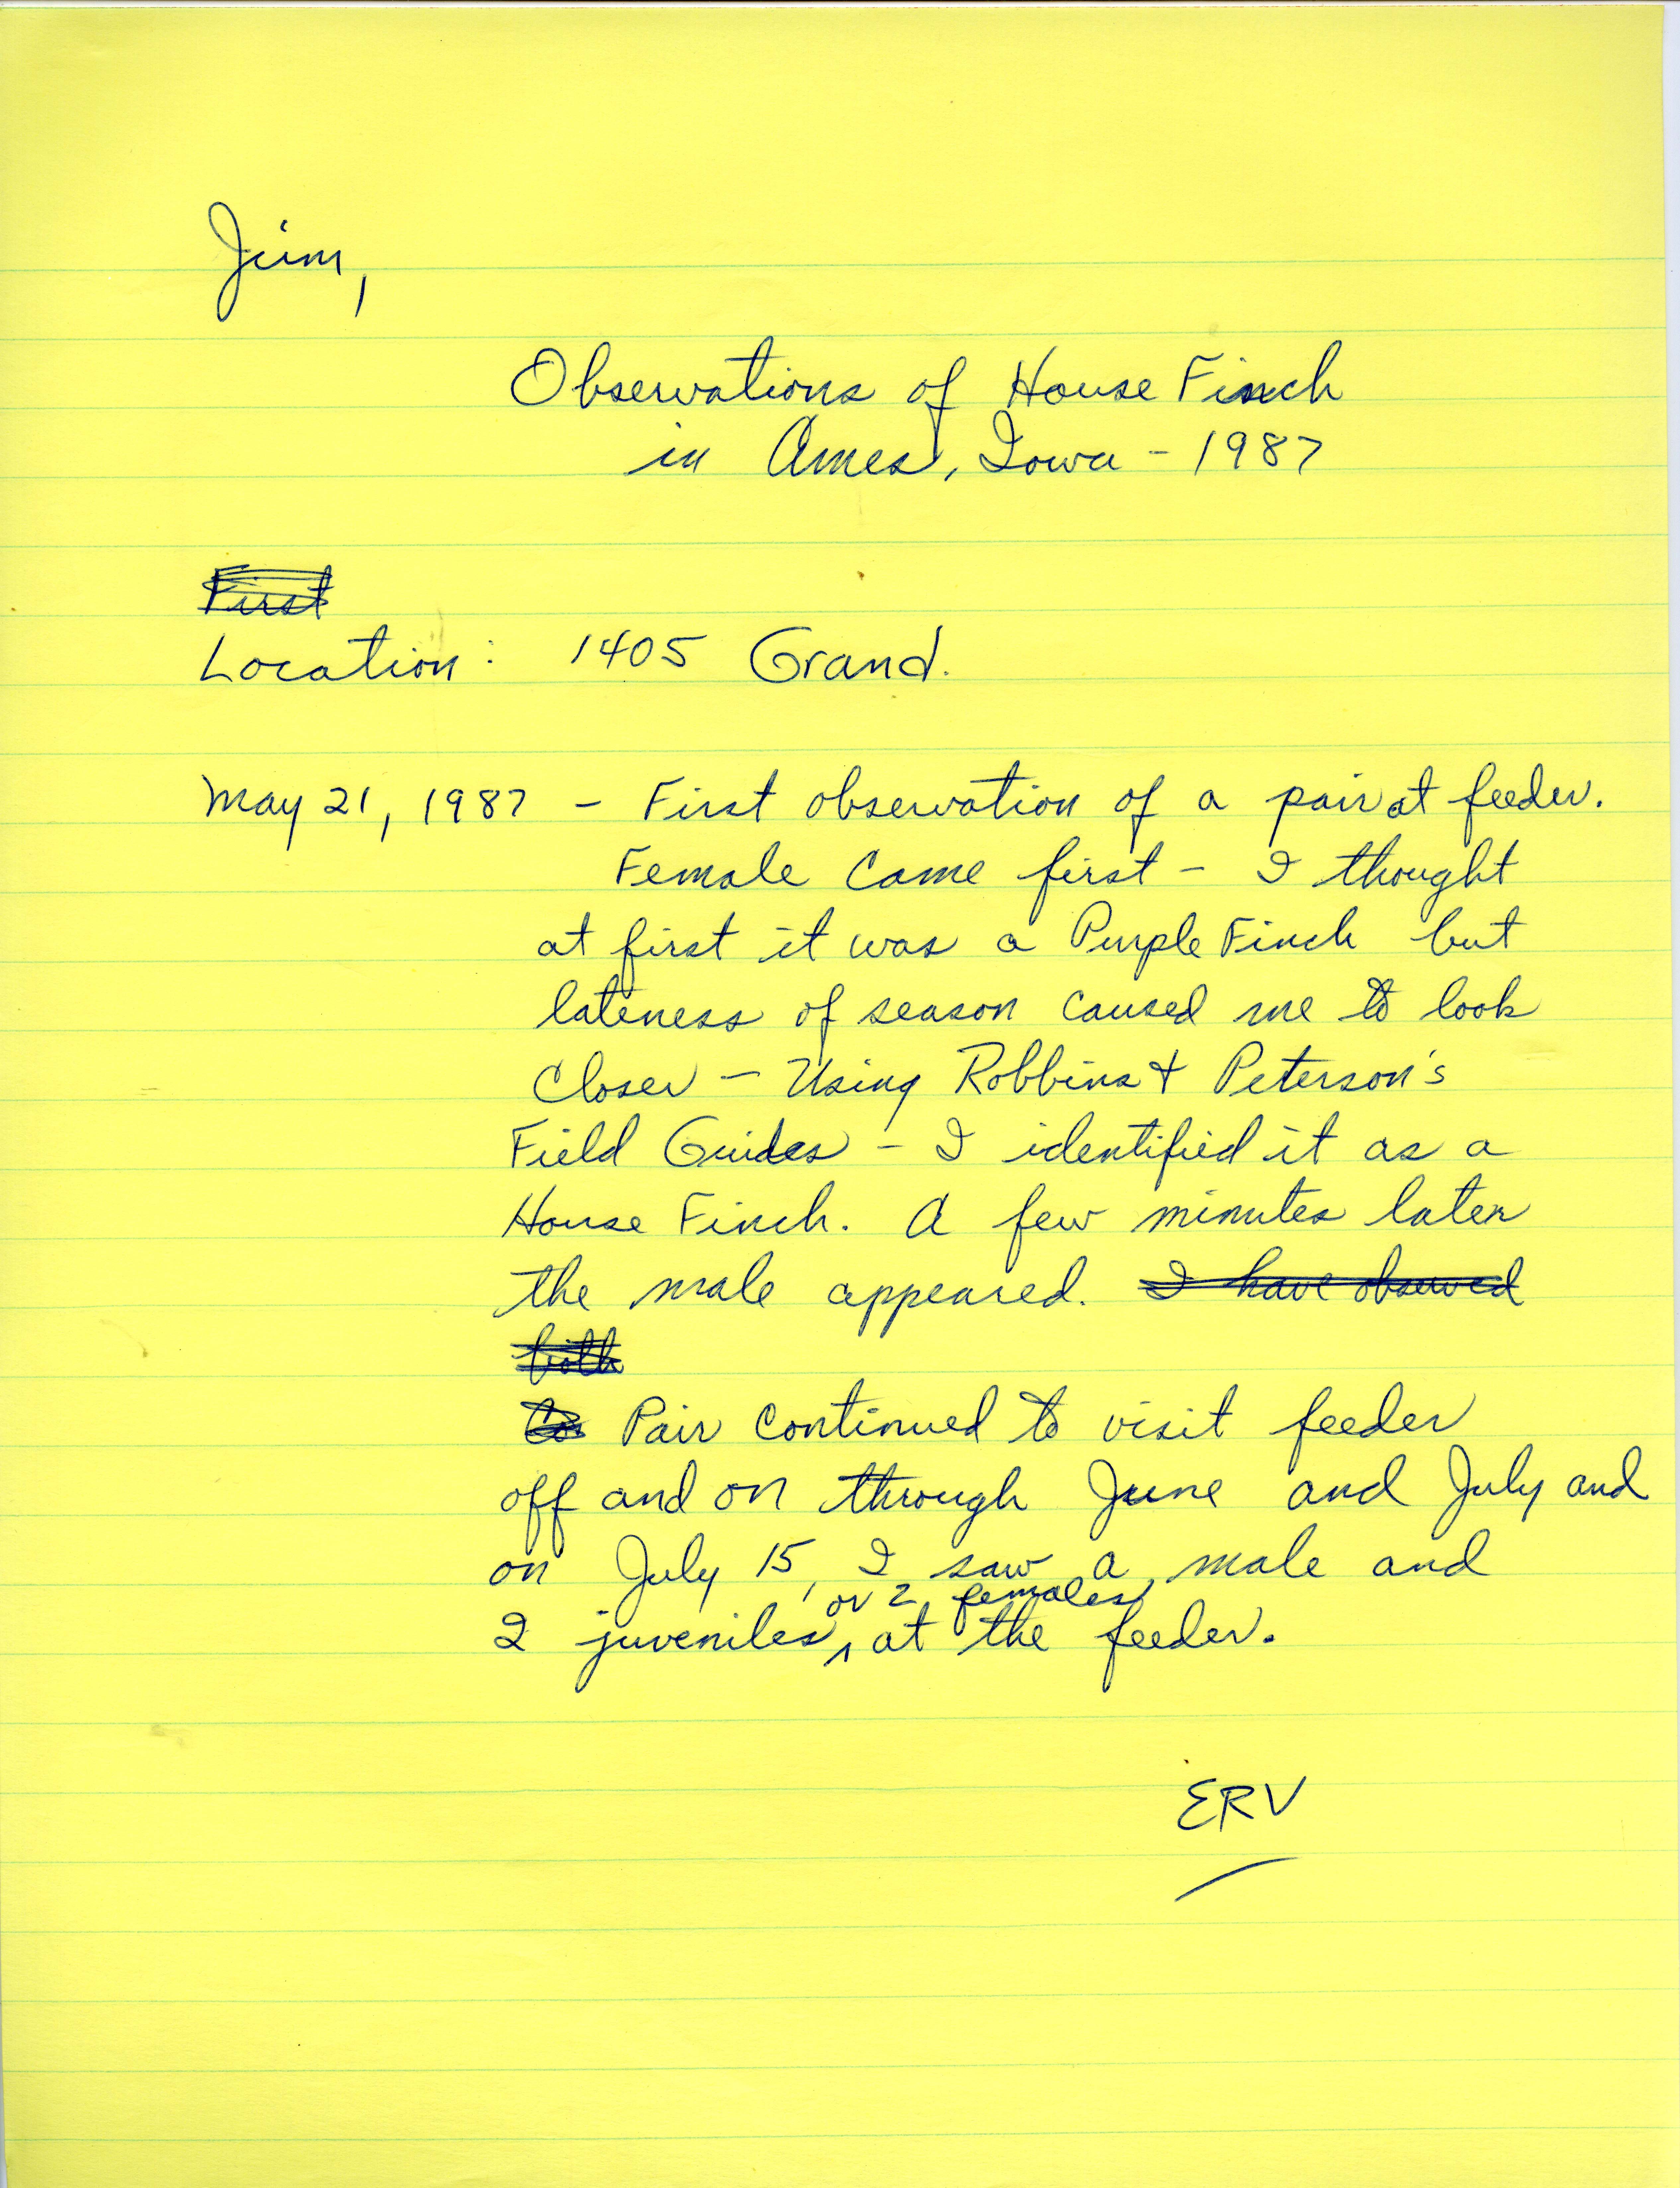 Erwin E. Klaas letter to James J. Dinsmore regarding a House Finch sighting, summer 1987